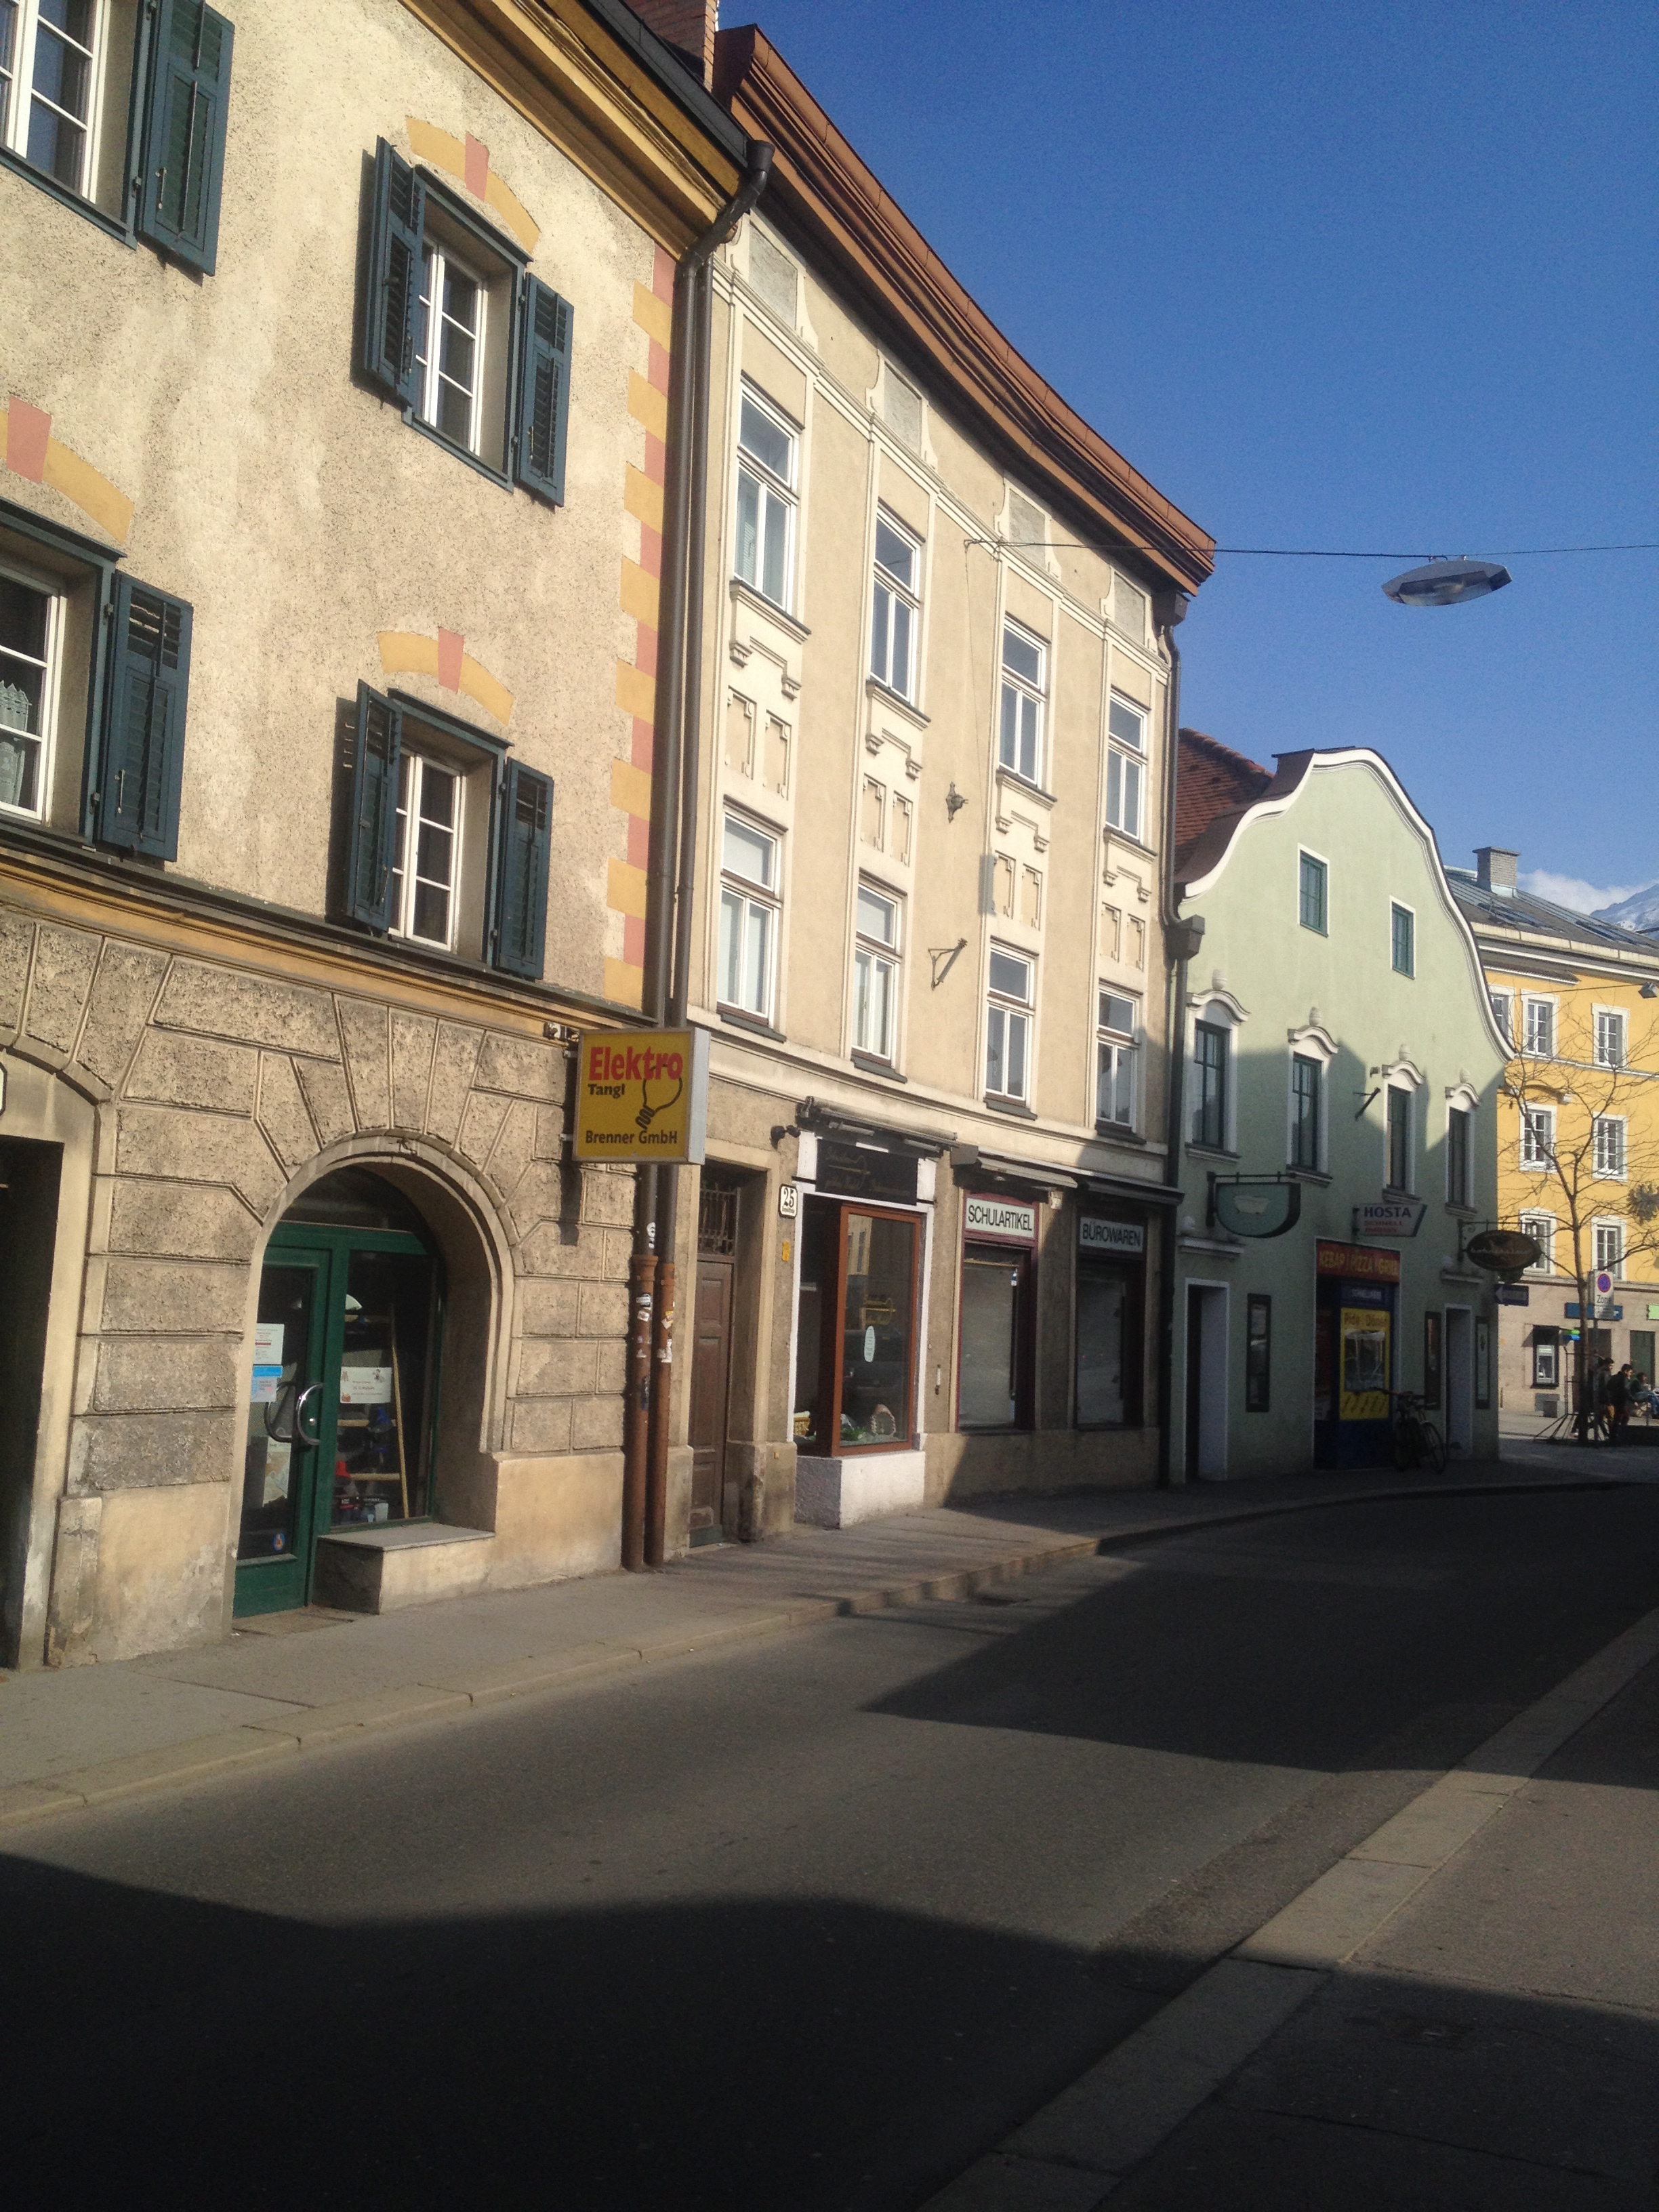 Leopoldstrasse appena prima di arrivare a Wiltener Platzl, Innsbruck